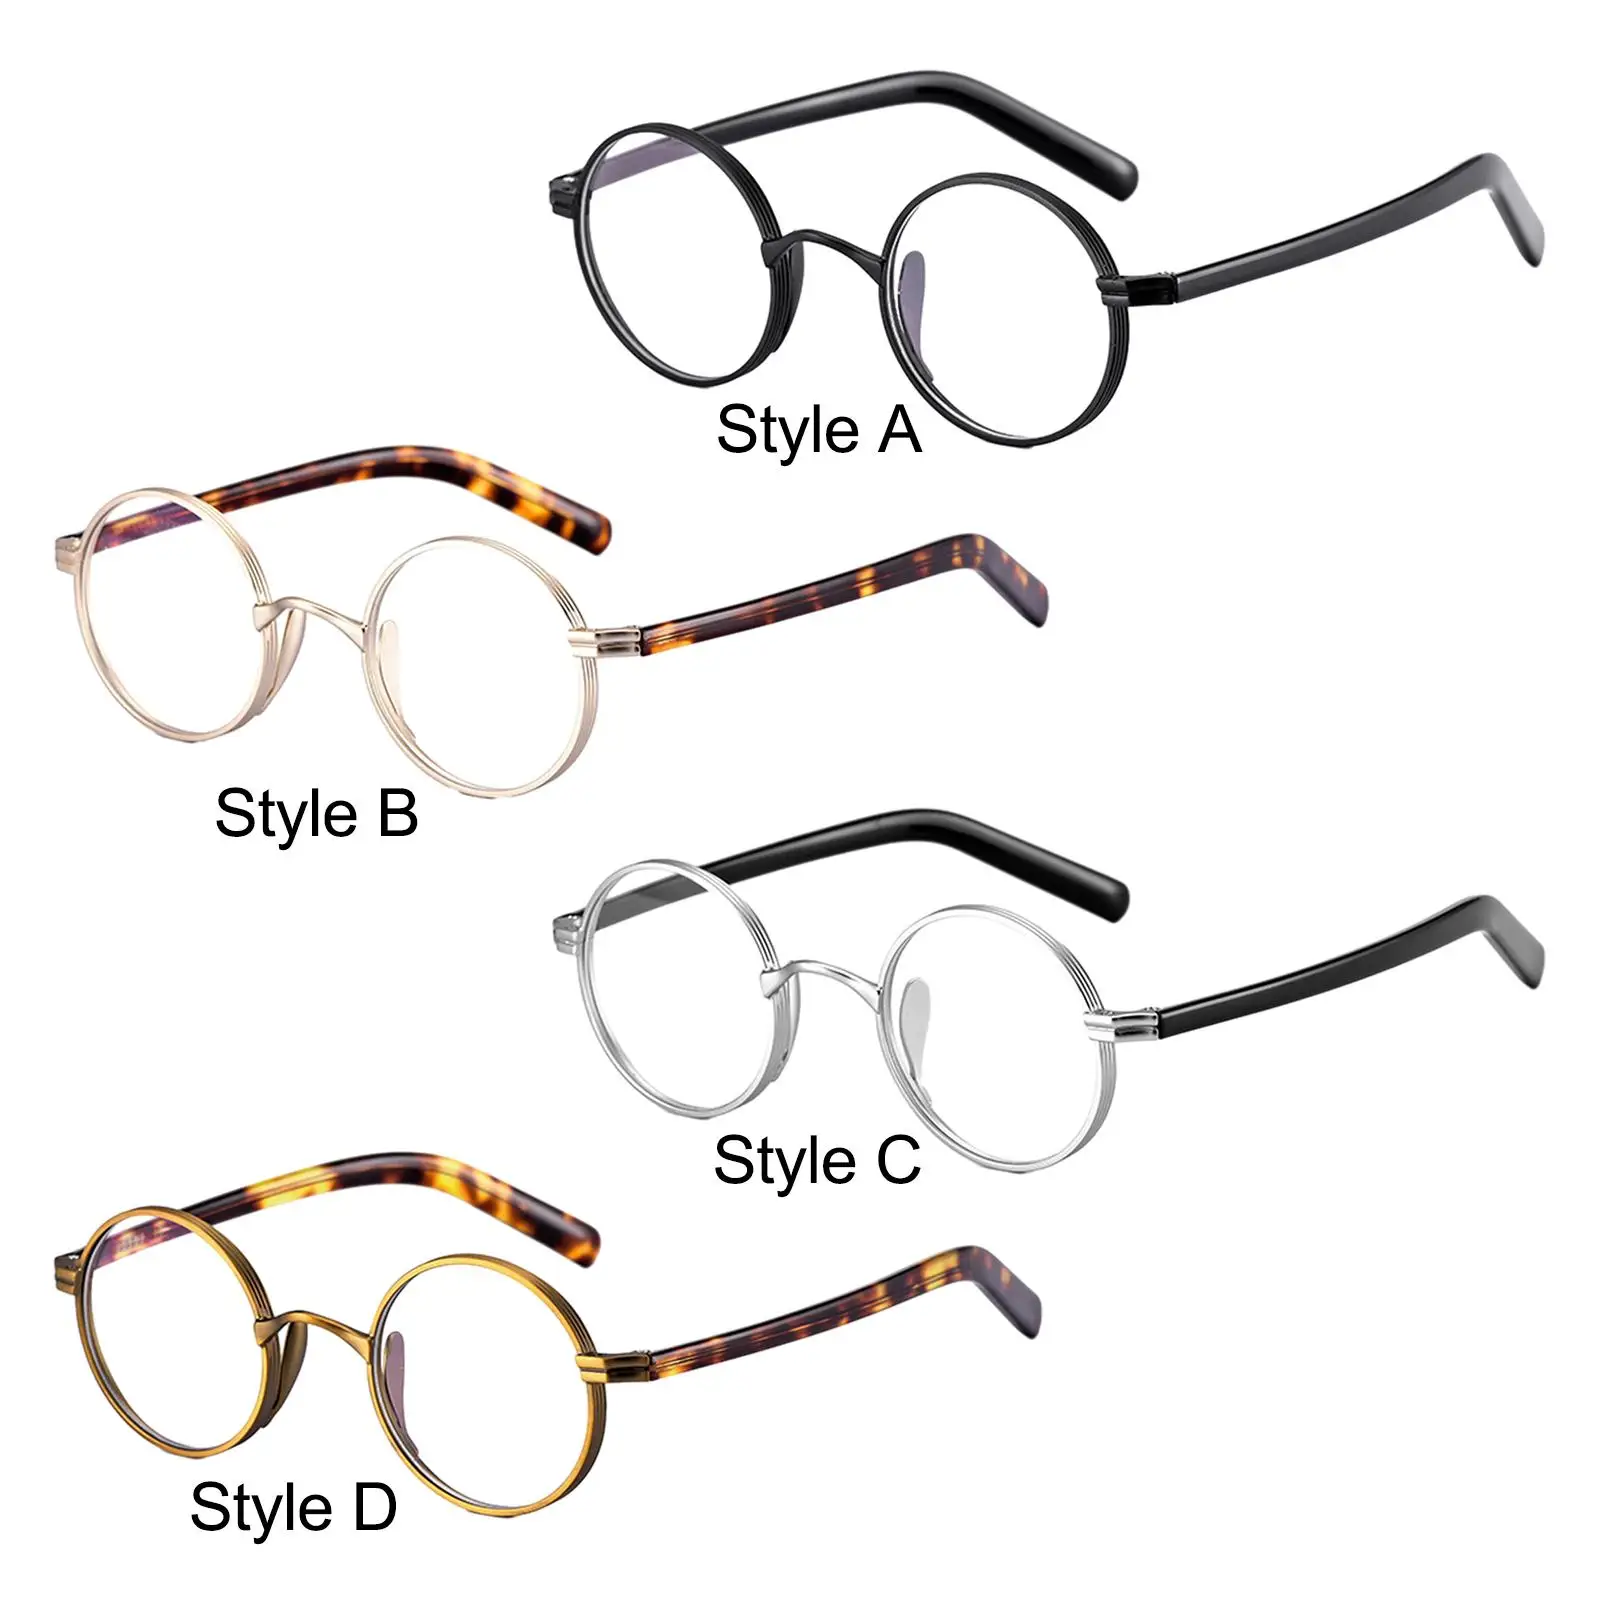 Glasses Frames Titanium Alloy Eyeglass Frame Comfortable to Wear Oval Oversized Eyewear Frames Round Eyeglasses Frames